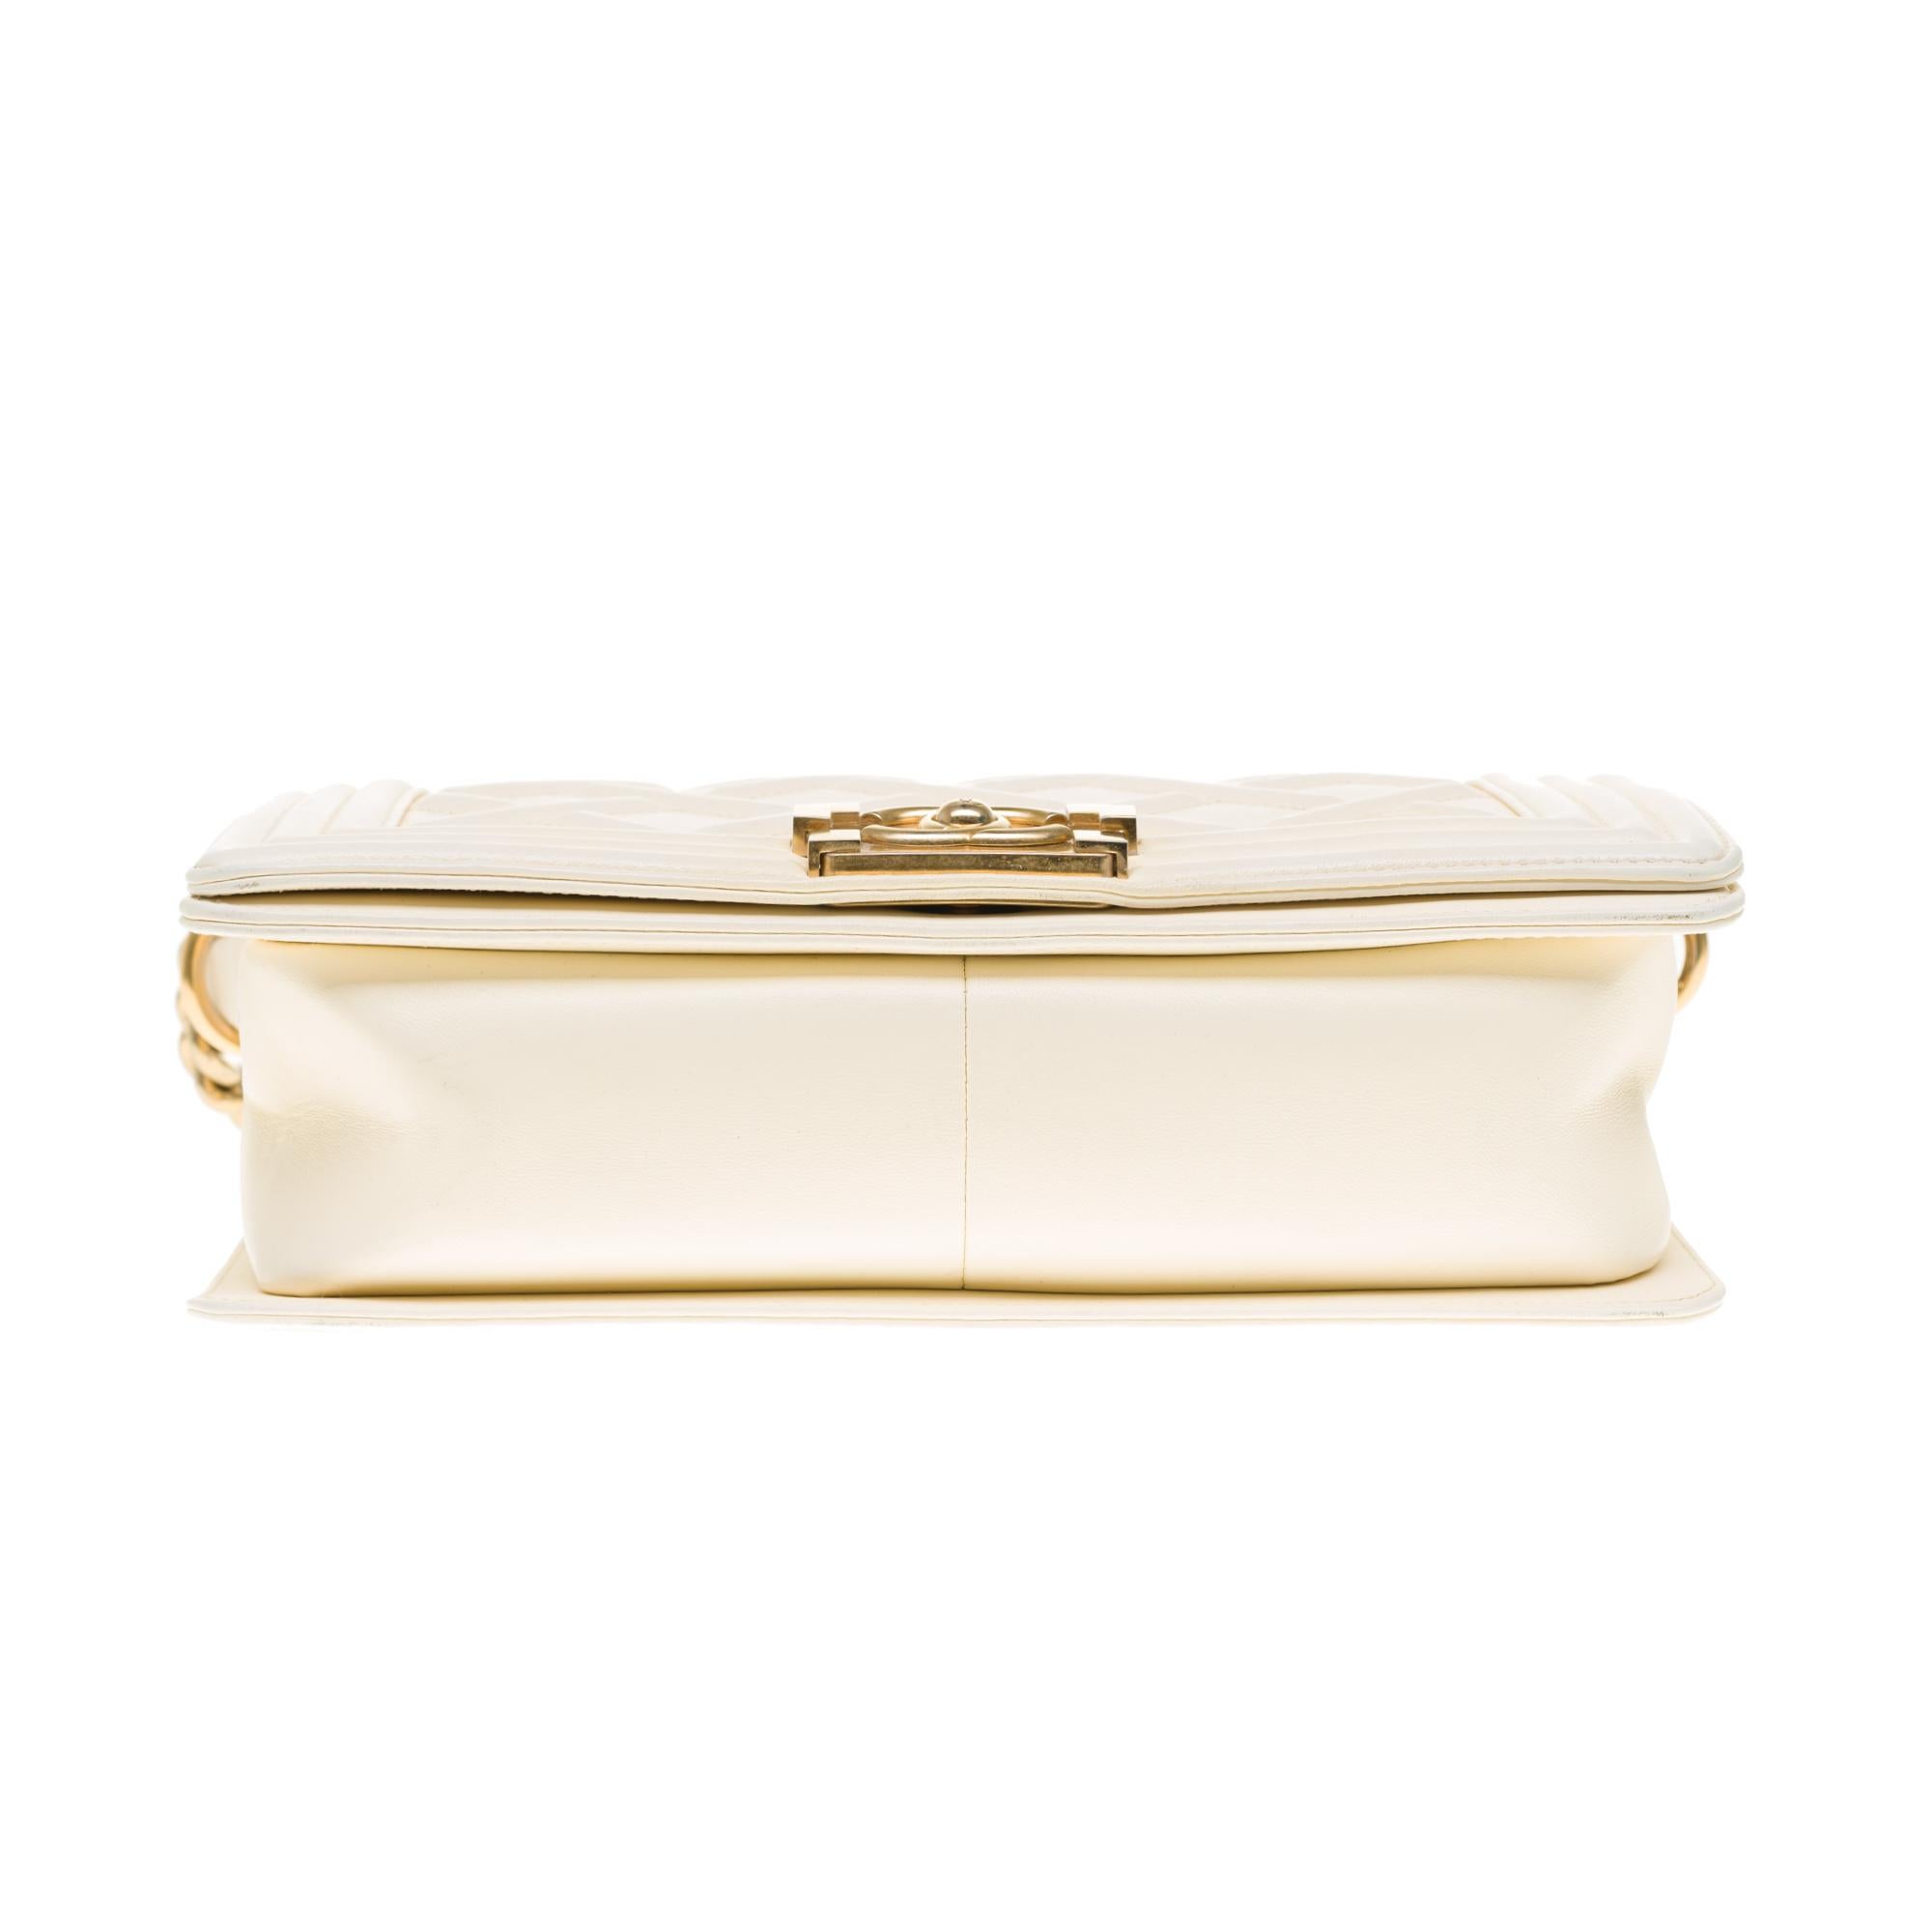 Chanel Boy Paris/Edinburgh handbag in ivory embossed leather, GHW ! 5